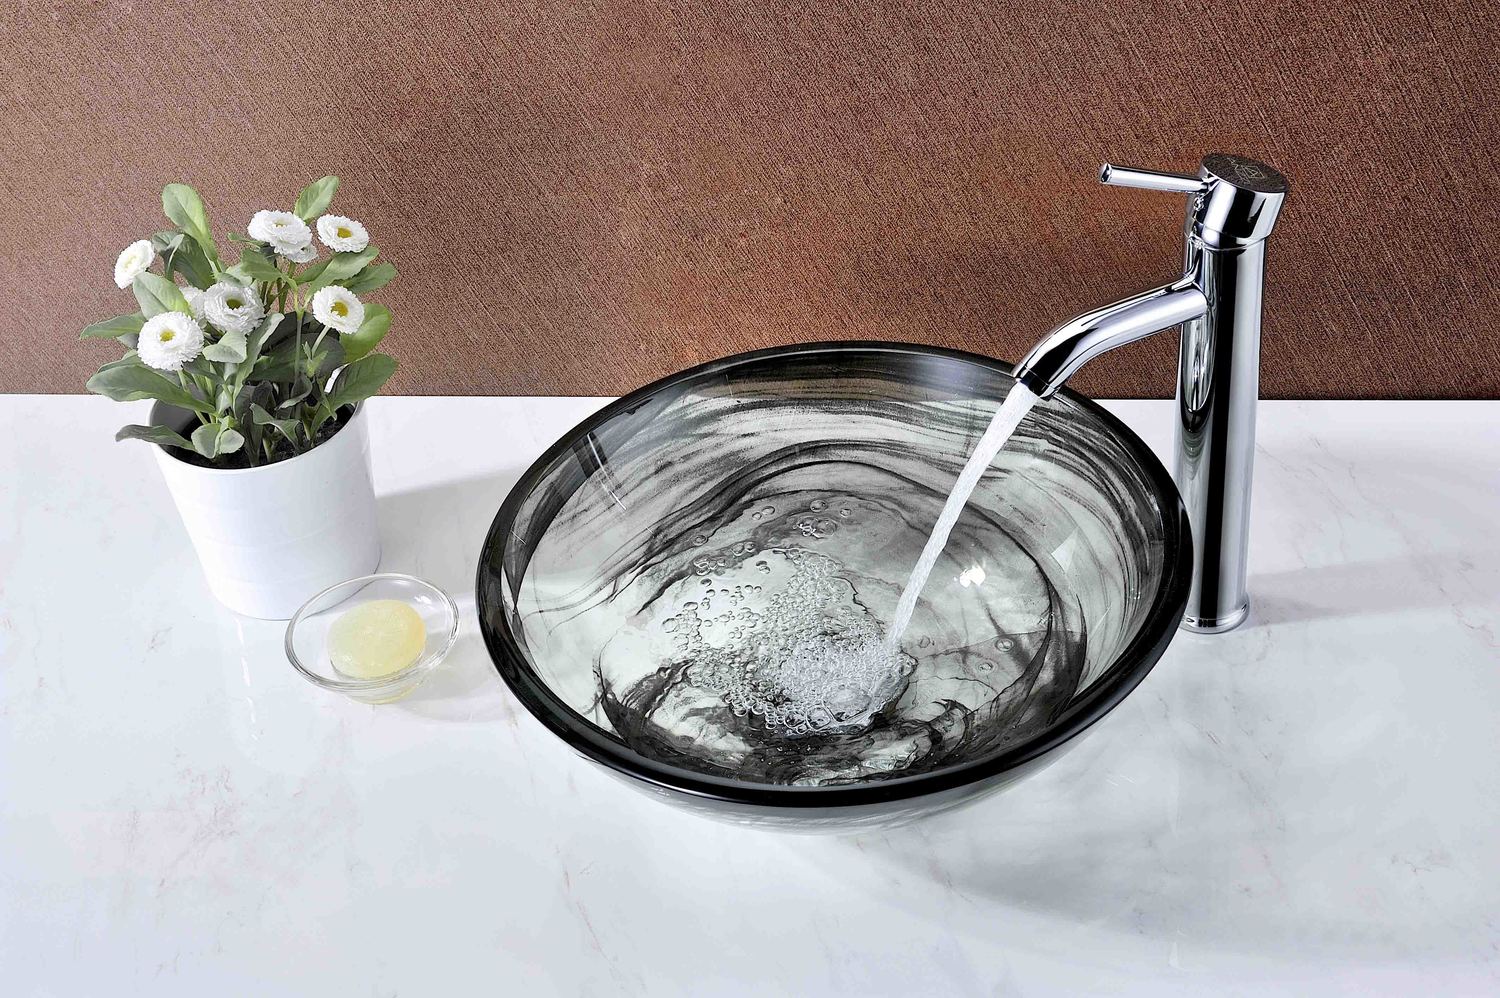 white bathroom vanity with black sink Anzzi BATHROOM - Sinks - Vessel - Tempered Glass Gray